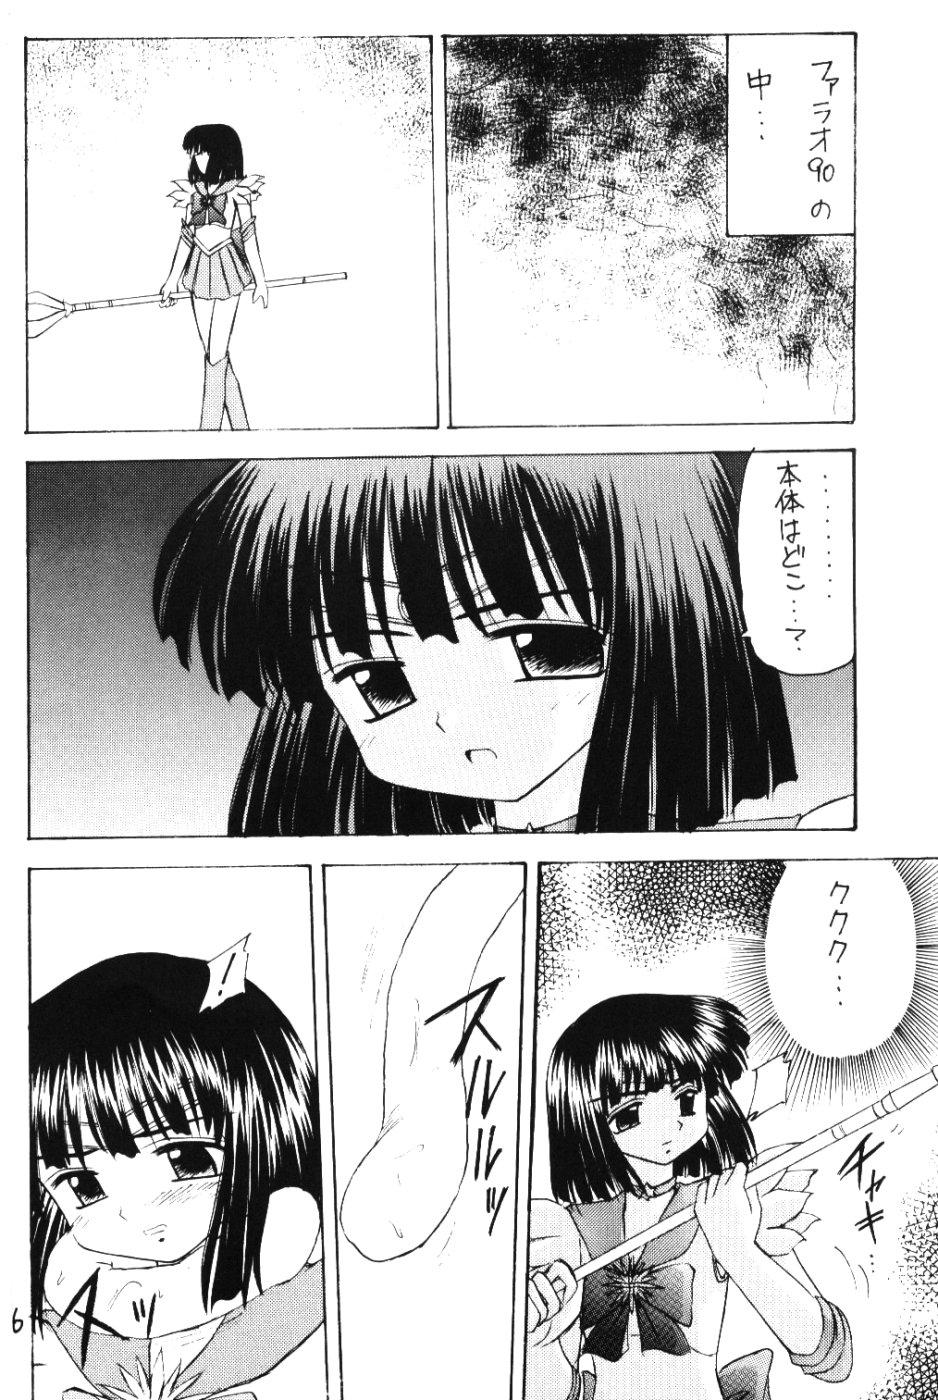 Ink Hotaru VI - Sailor moon Tetona - Page 5